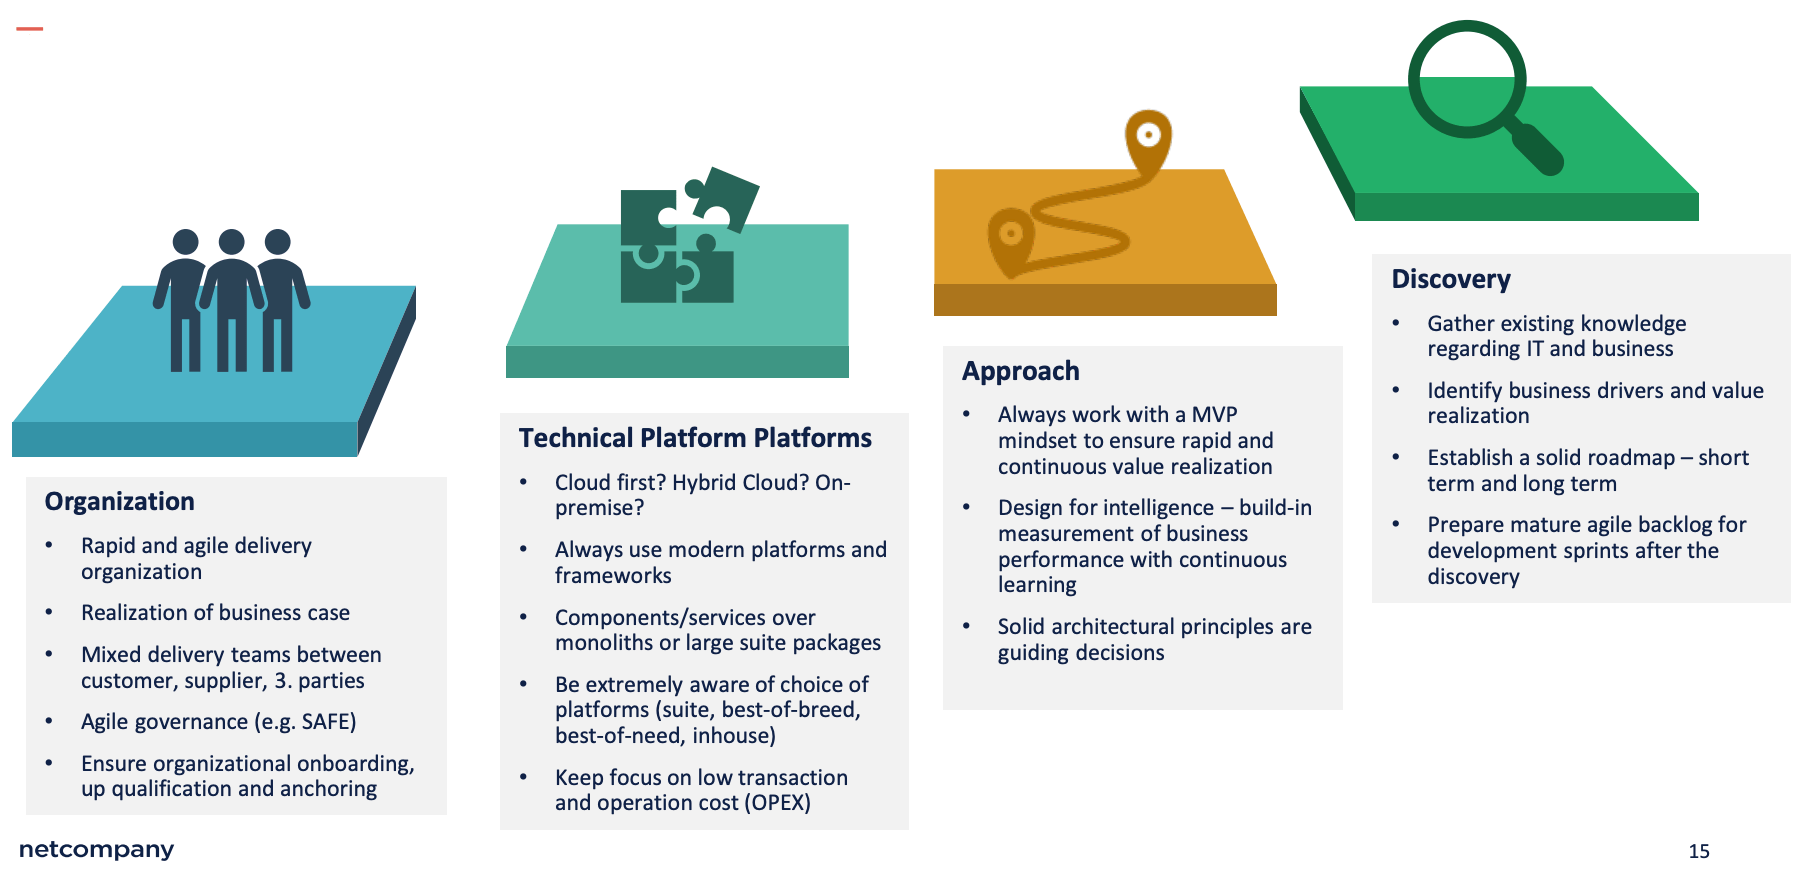 Netcompany platform approach